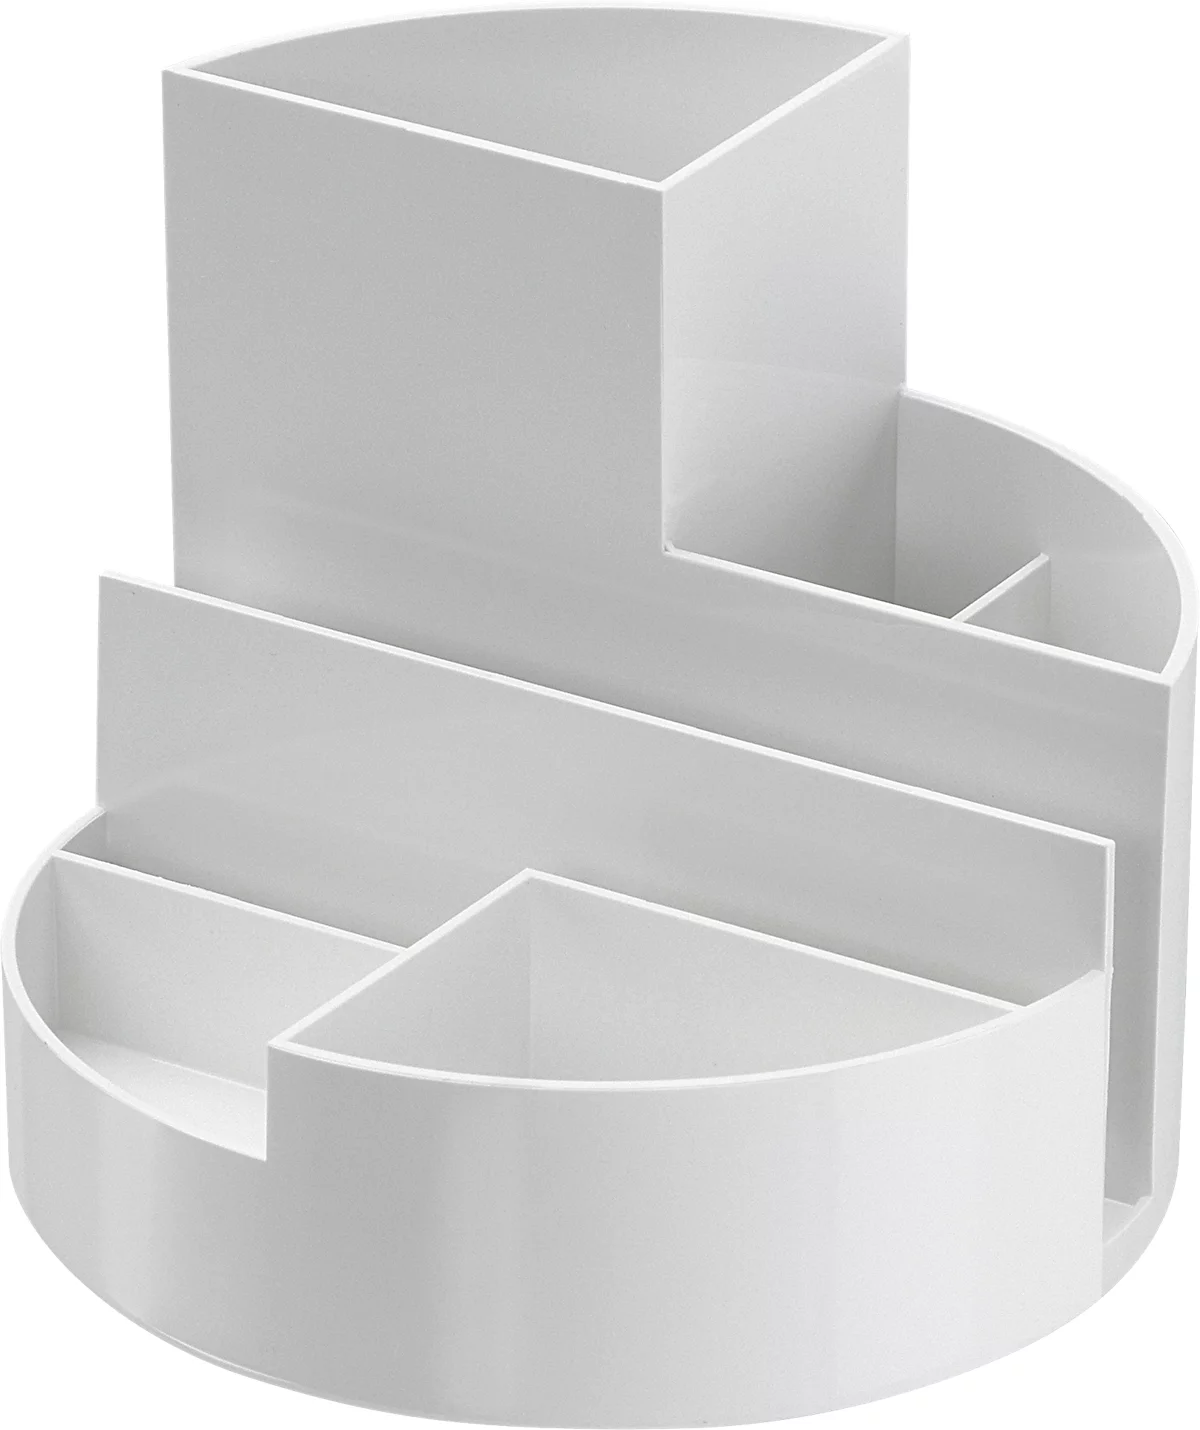 Stifteköcher MAUL MAULrundbox eco, 6 Fächer inkl. Zettel- & Brieffach, Ø 140 x H 125 mm, 90 % Recycling-Kunststoff, weiß